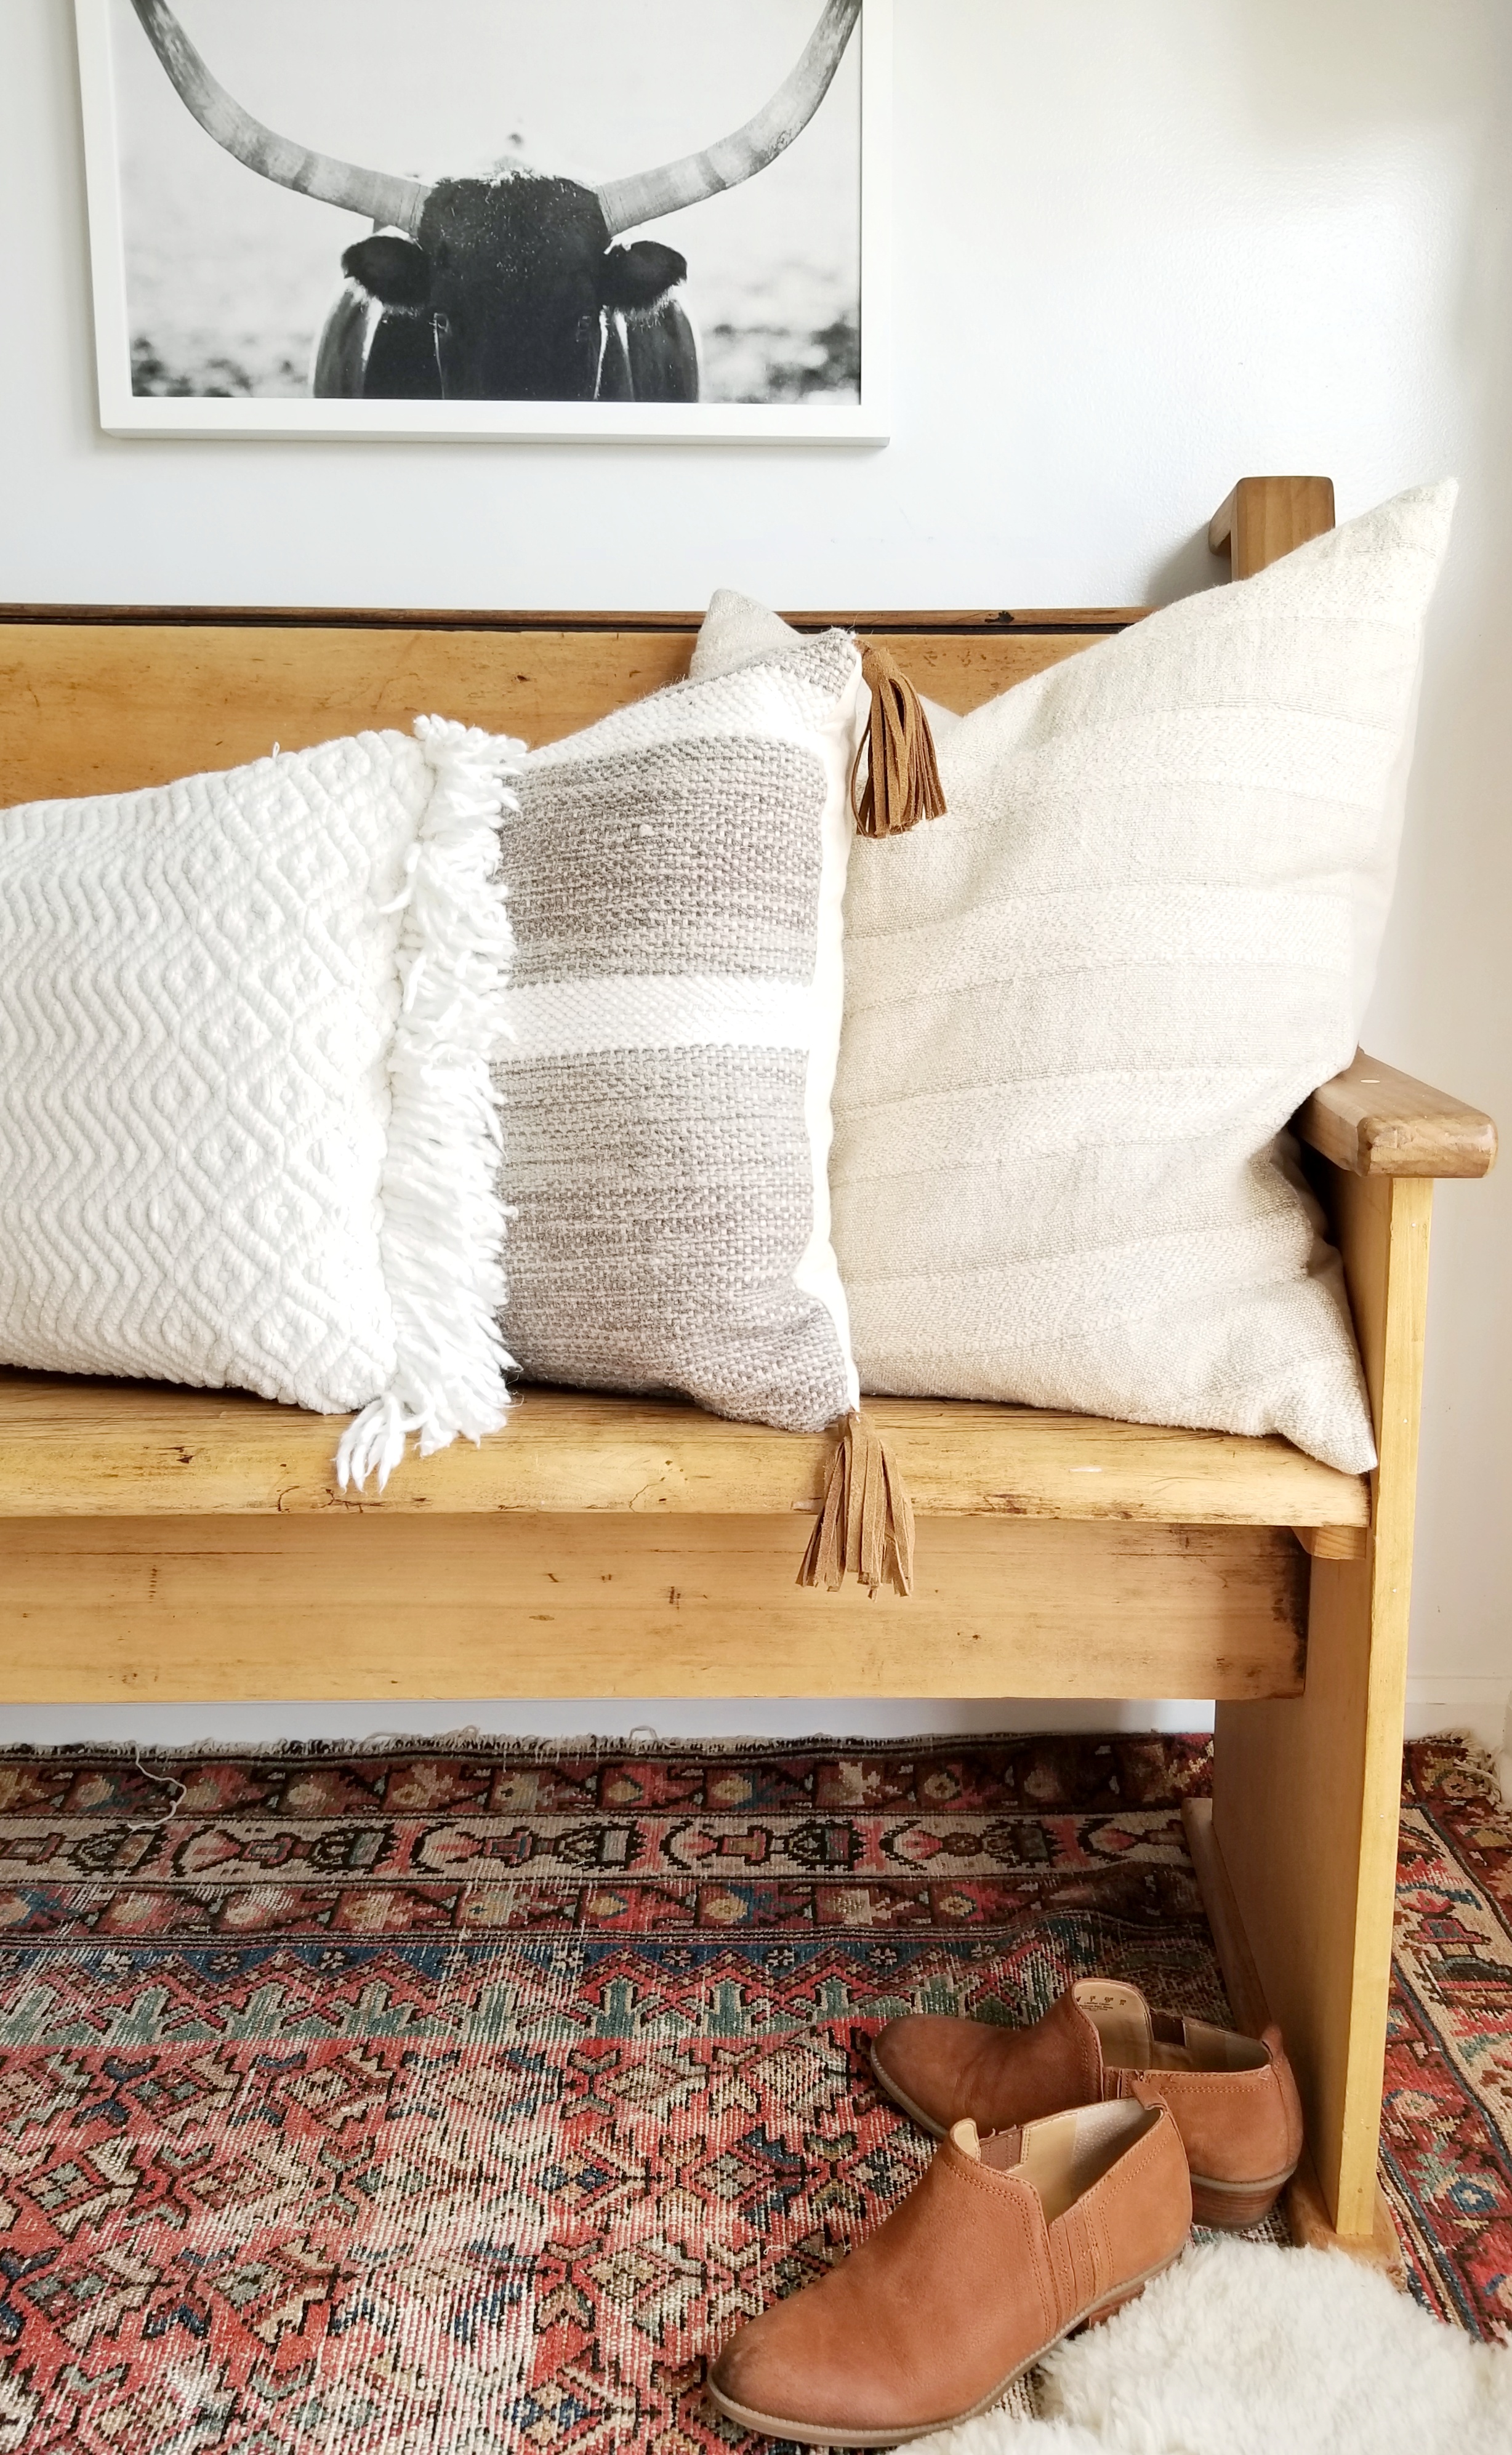 Use throw pillows to add texture to your modern farmhouse decor.